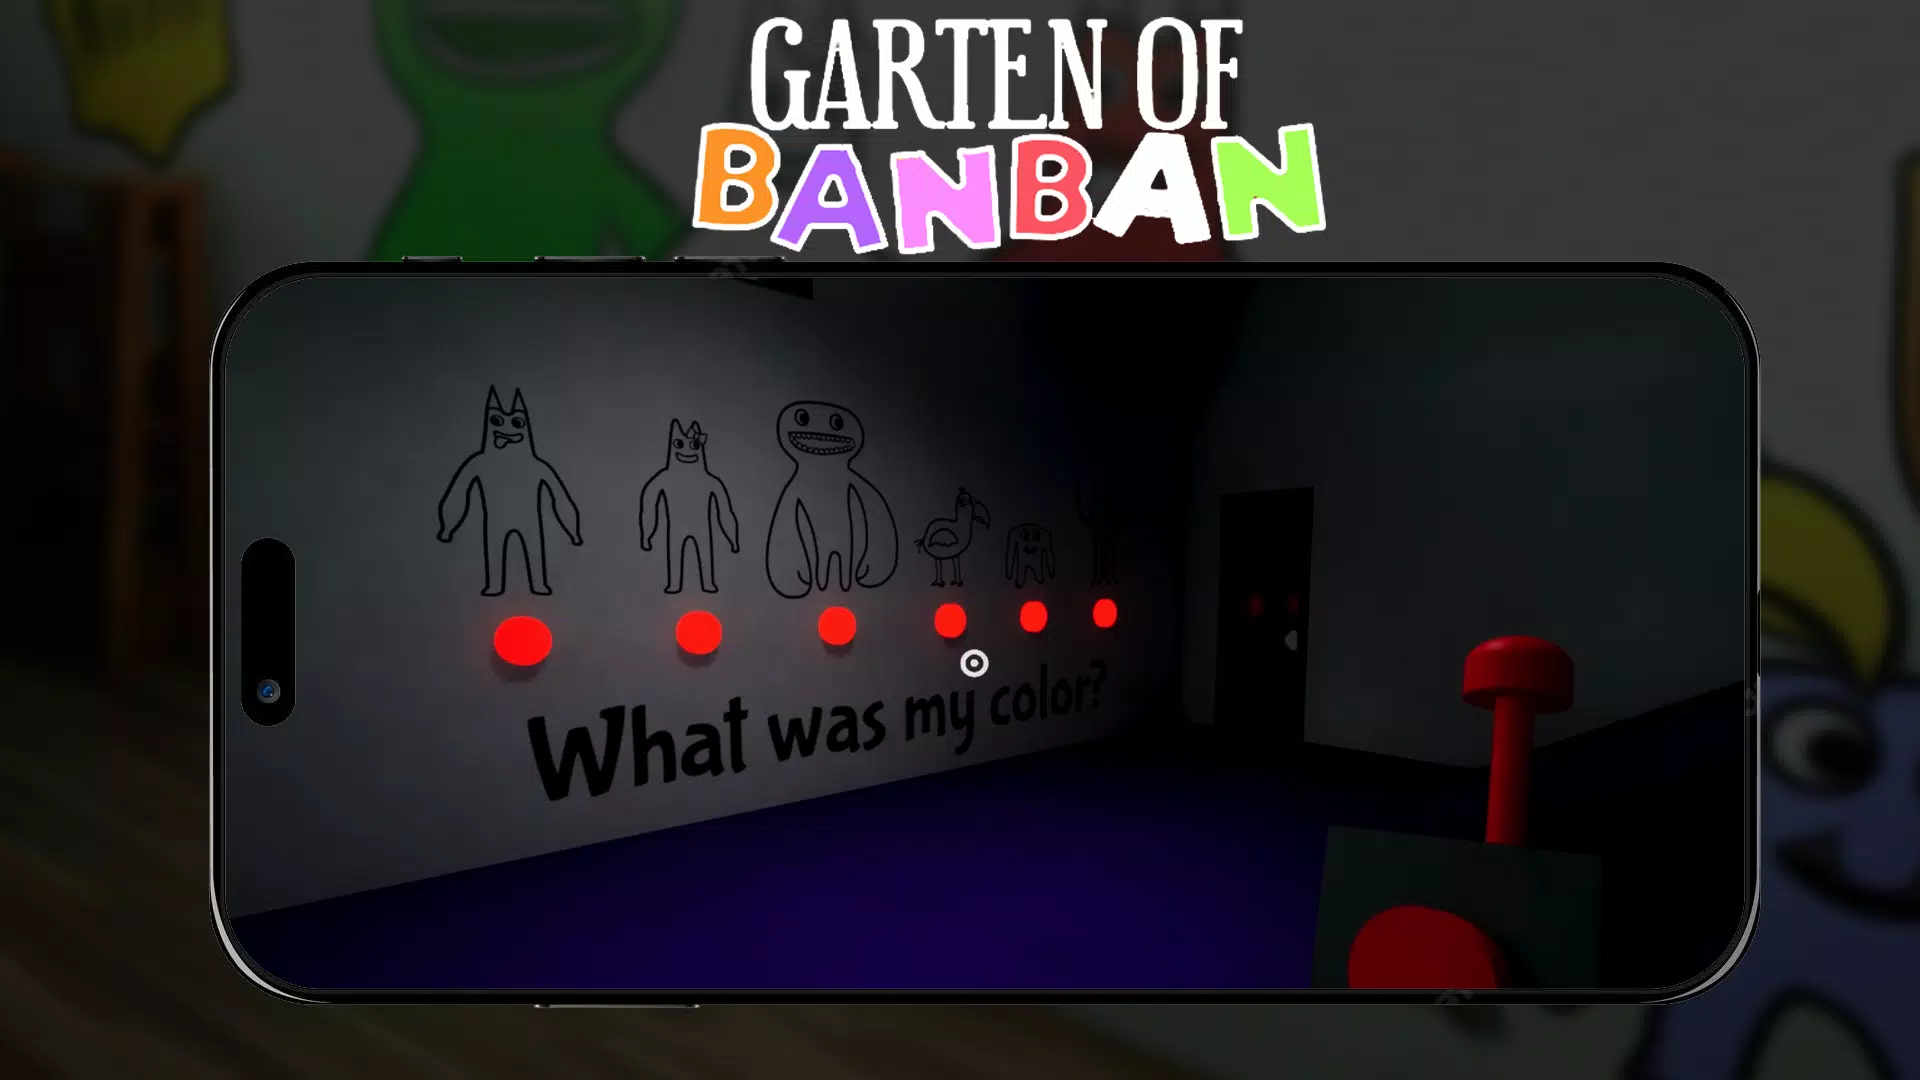 Garten of Banban Piano Game para Android - Download